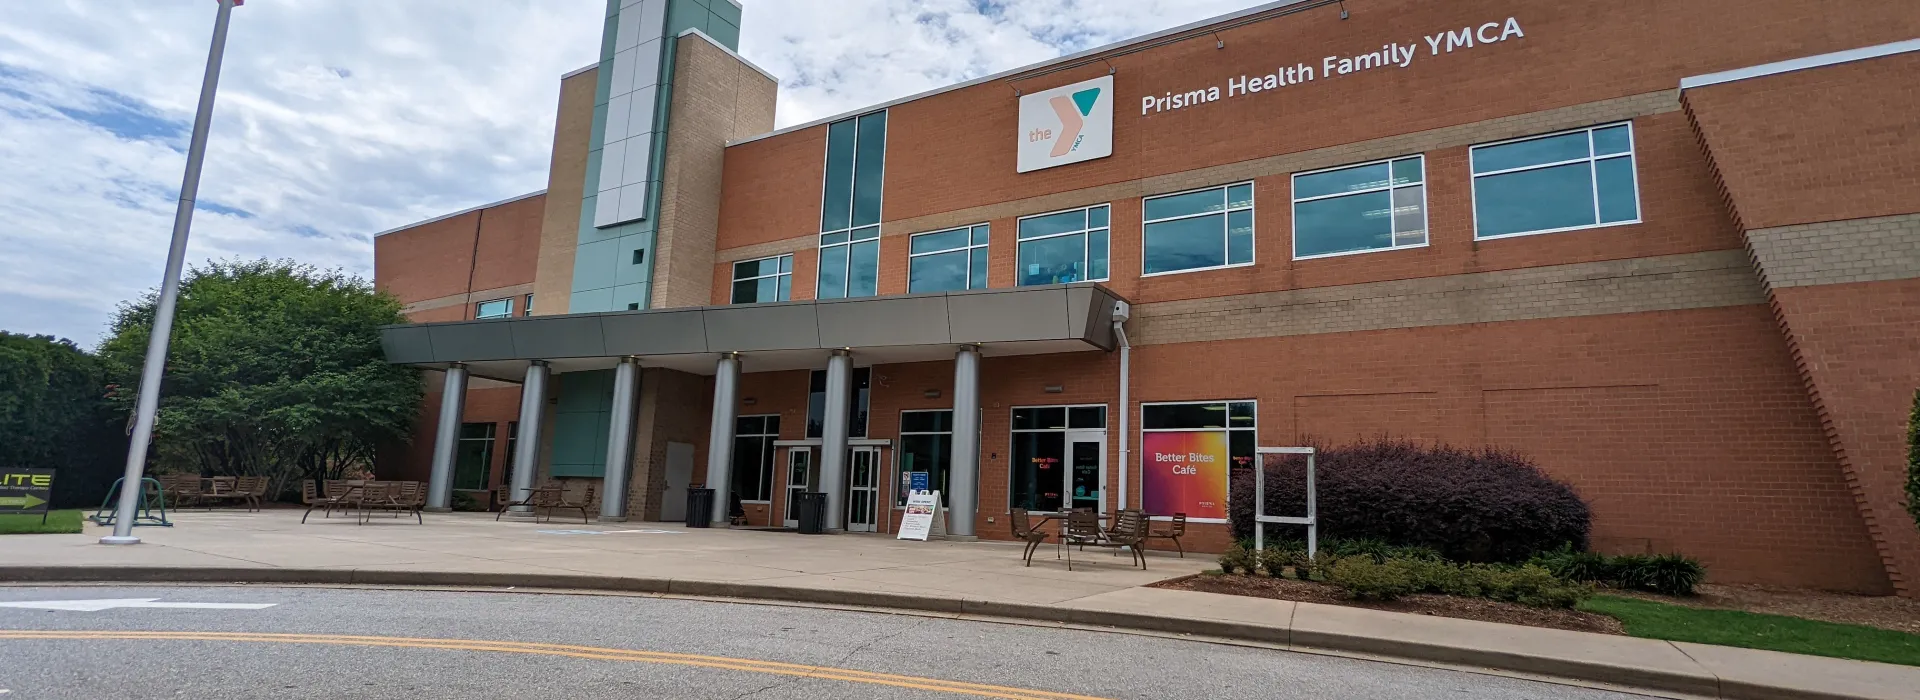 Prisma Health Family YMCA exterior